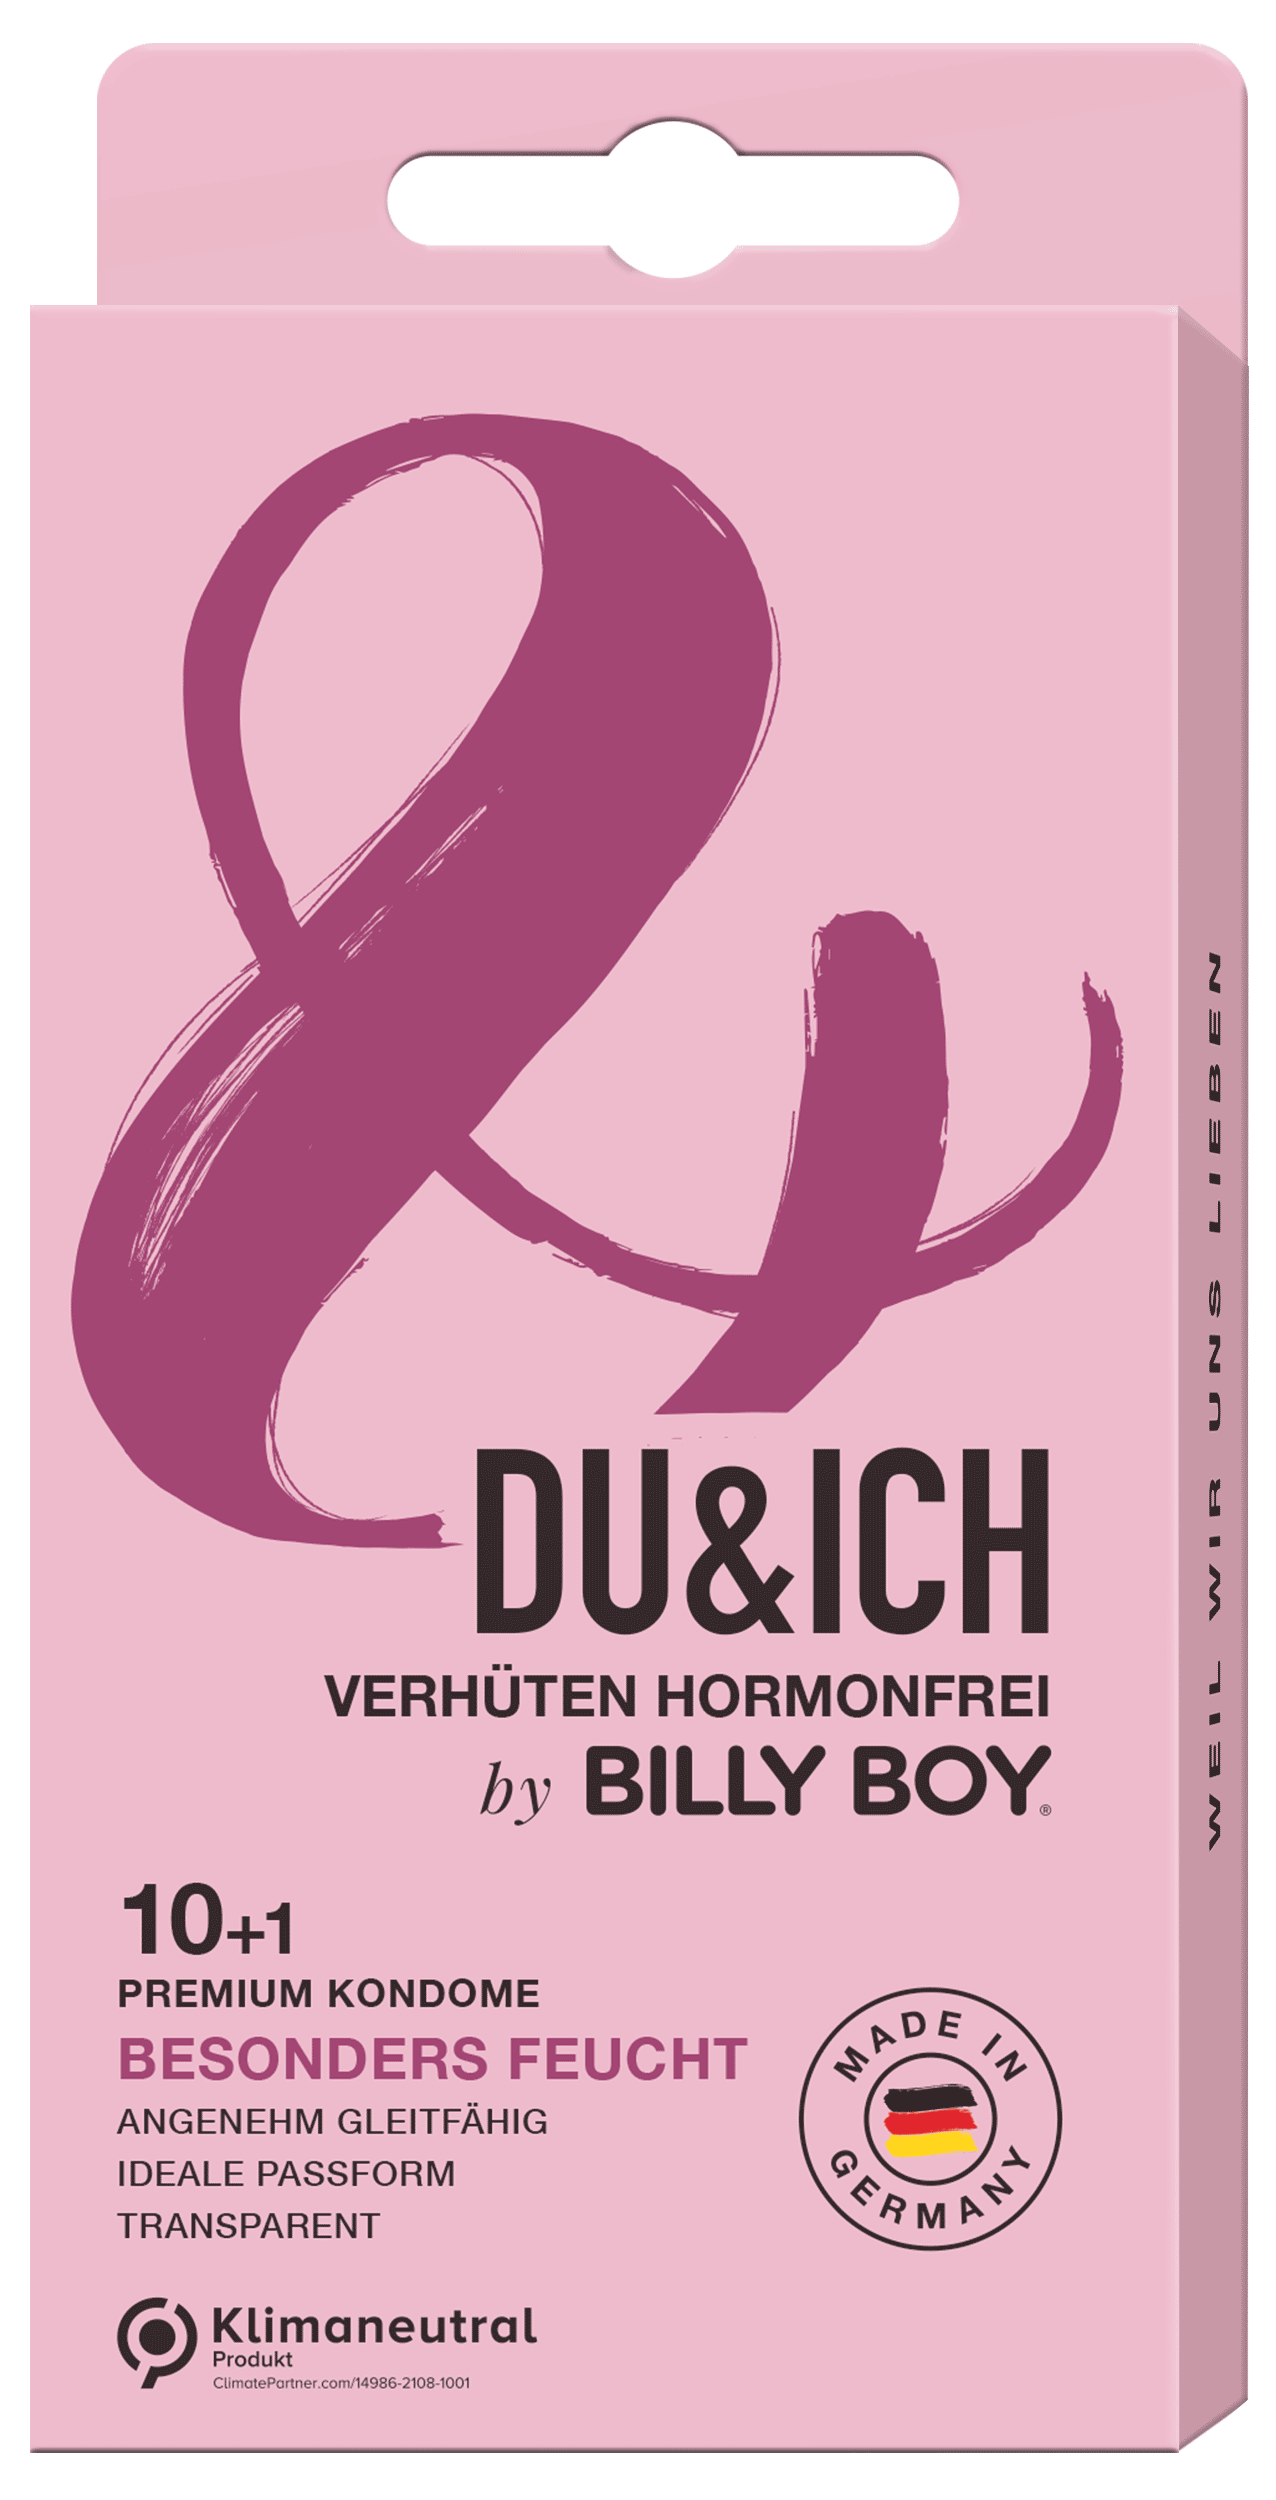 DU&ICH by BILLY BOY Kondome Besonders Feucht